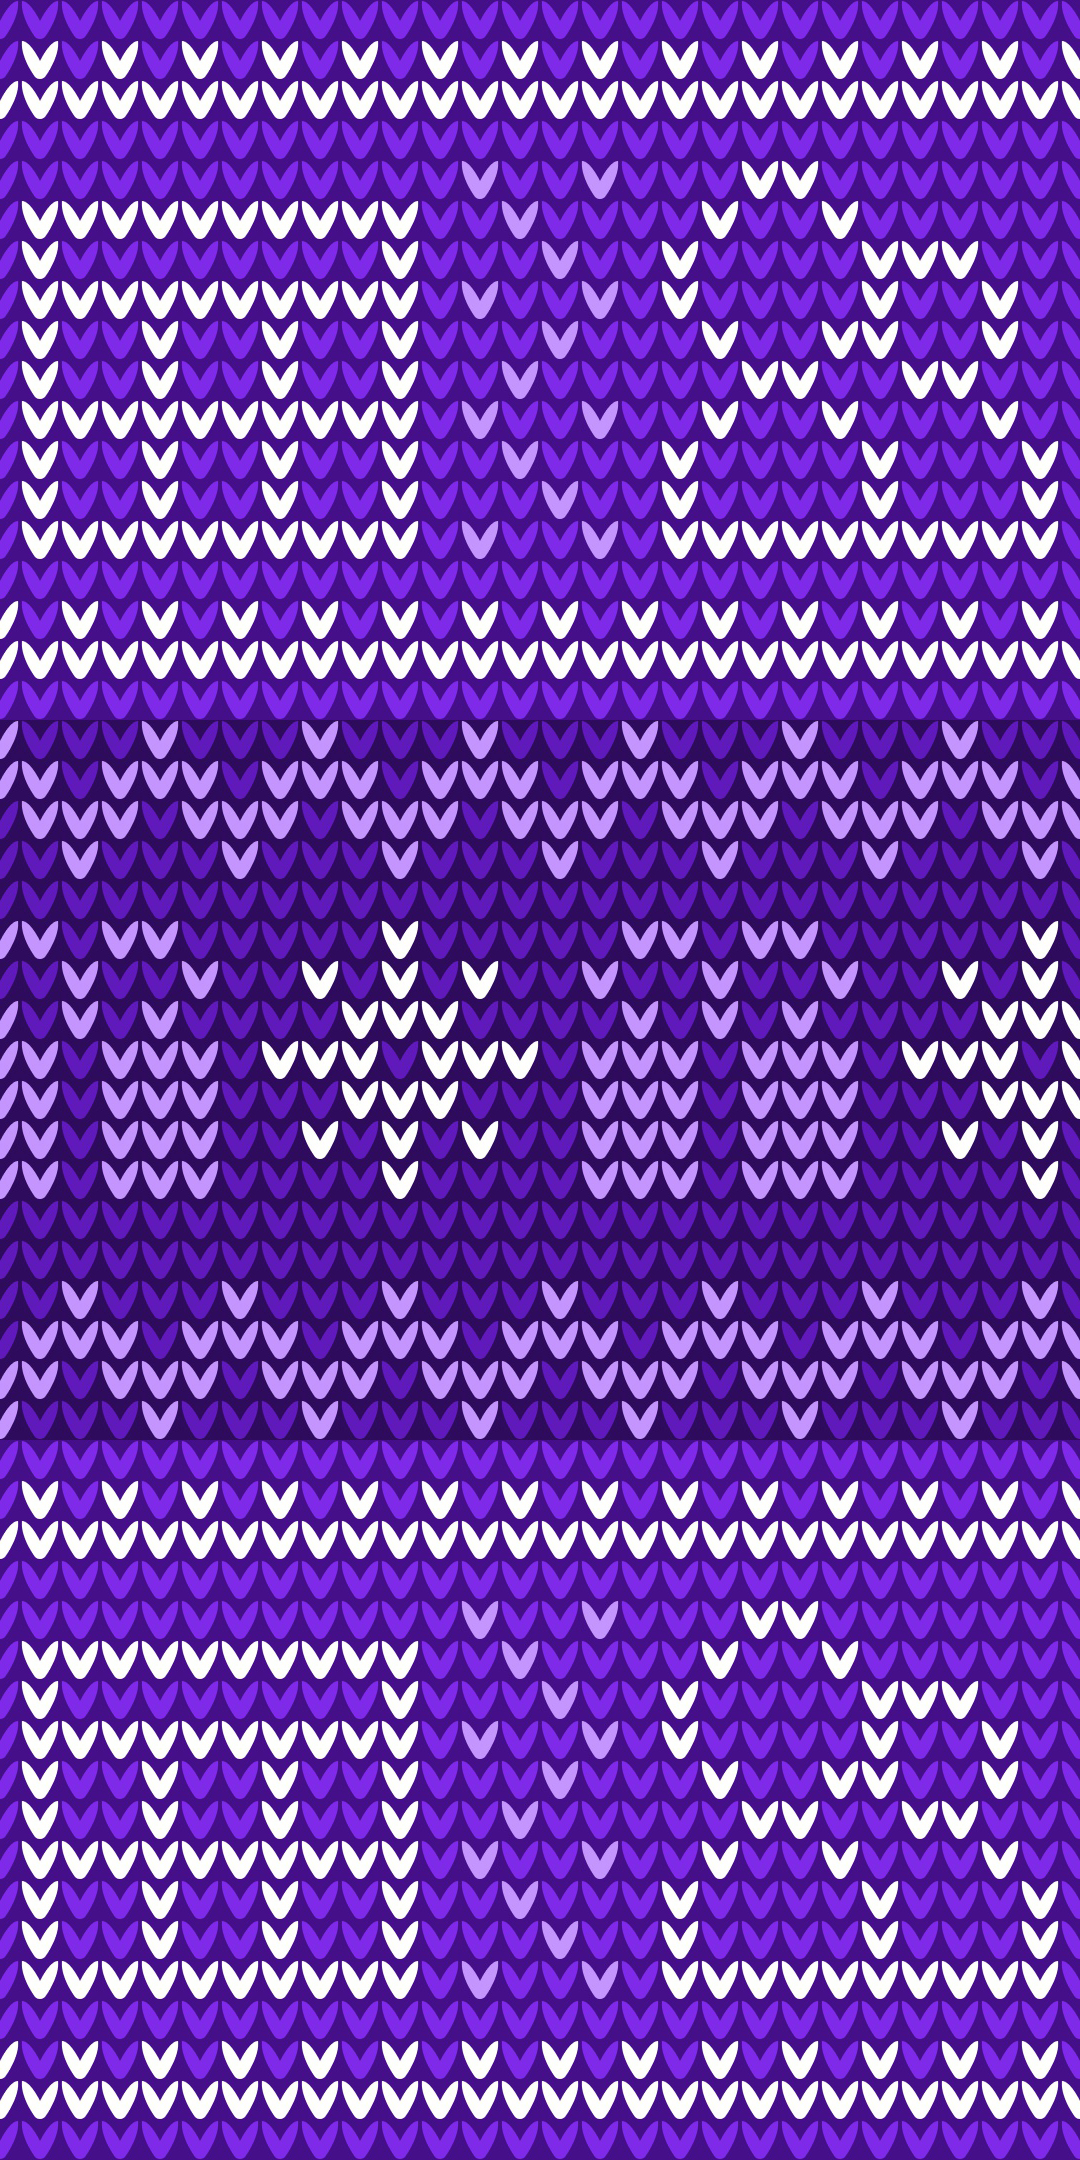 Microsoft stock, pattern on purple, abstract, 1080x2160 wallpaper